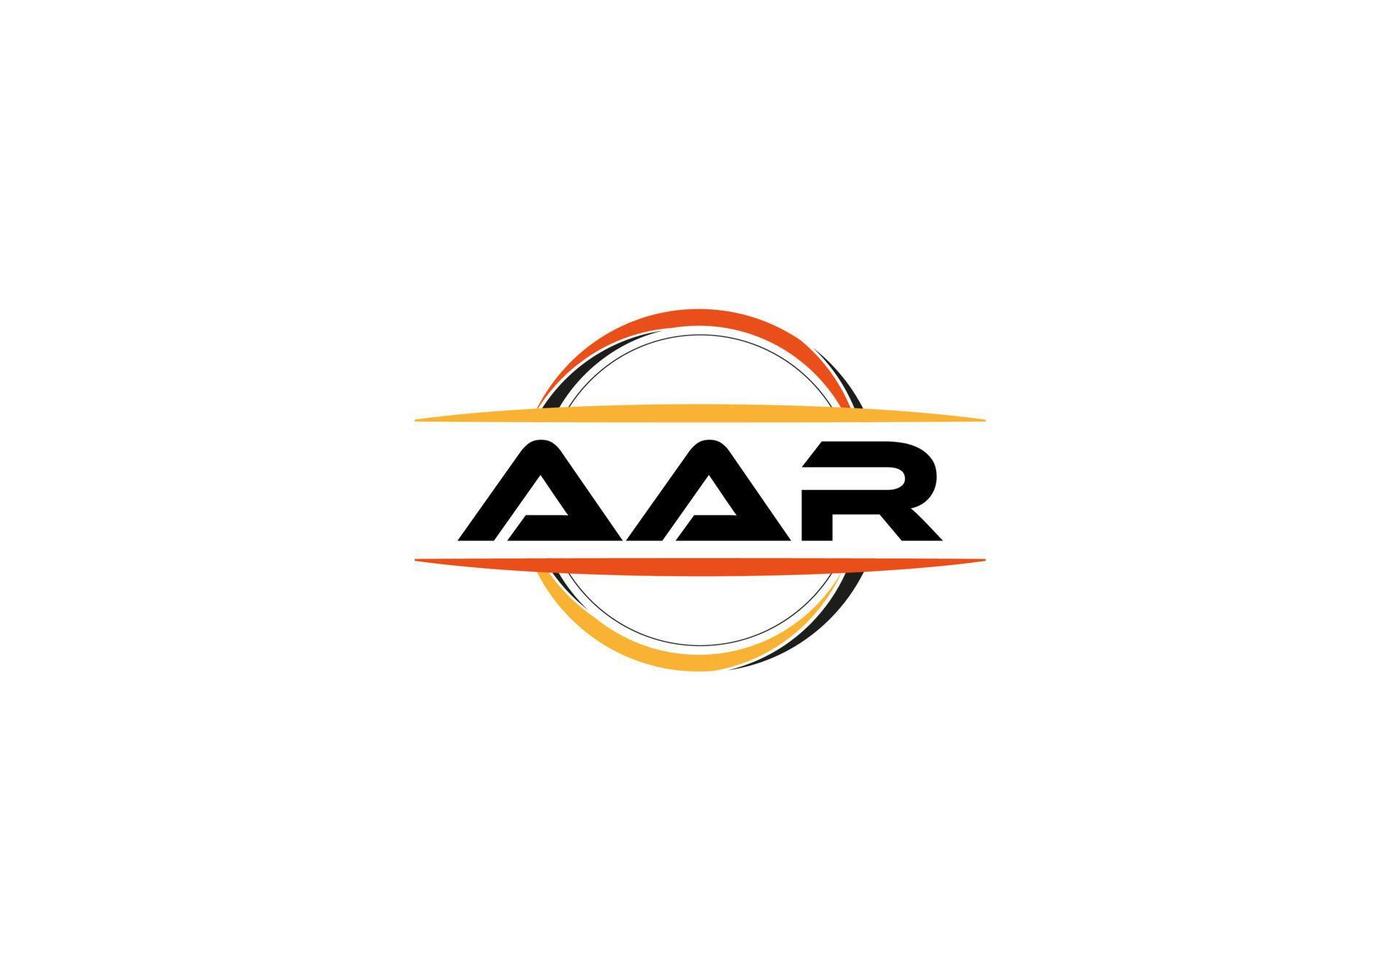 aar lettera reali ellisse forma logo. aar spazzola arte logo. aar logo per un' azienda, attività commerciale, e commerciale uso. vettore